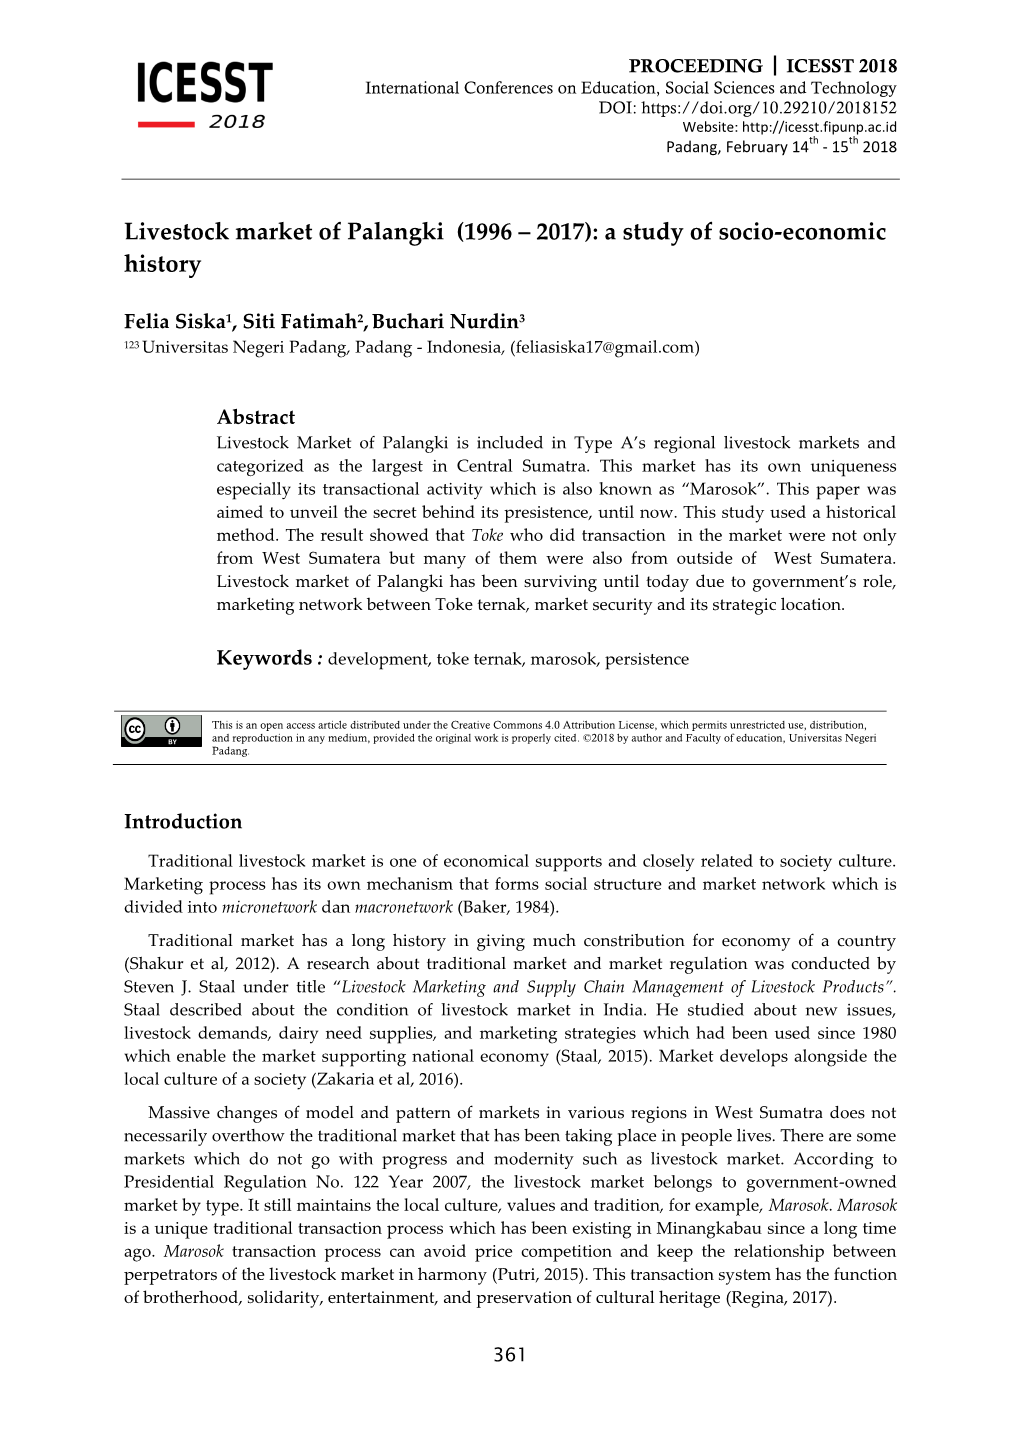 Livestock Market of Palangki (1996 ‒ 2017): a Study of Socio-Economic